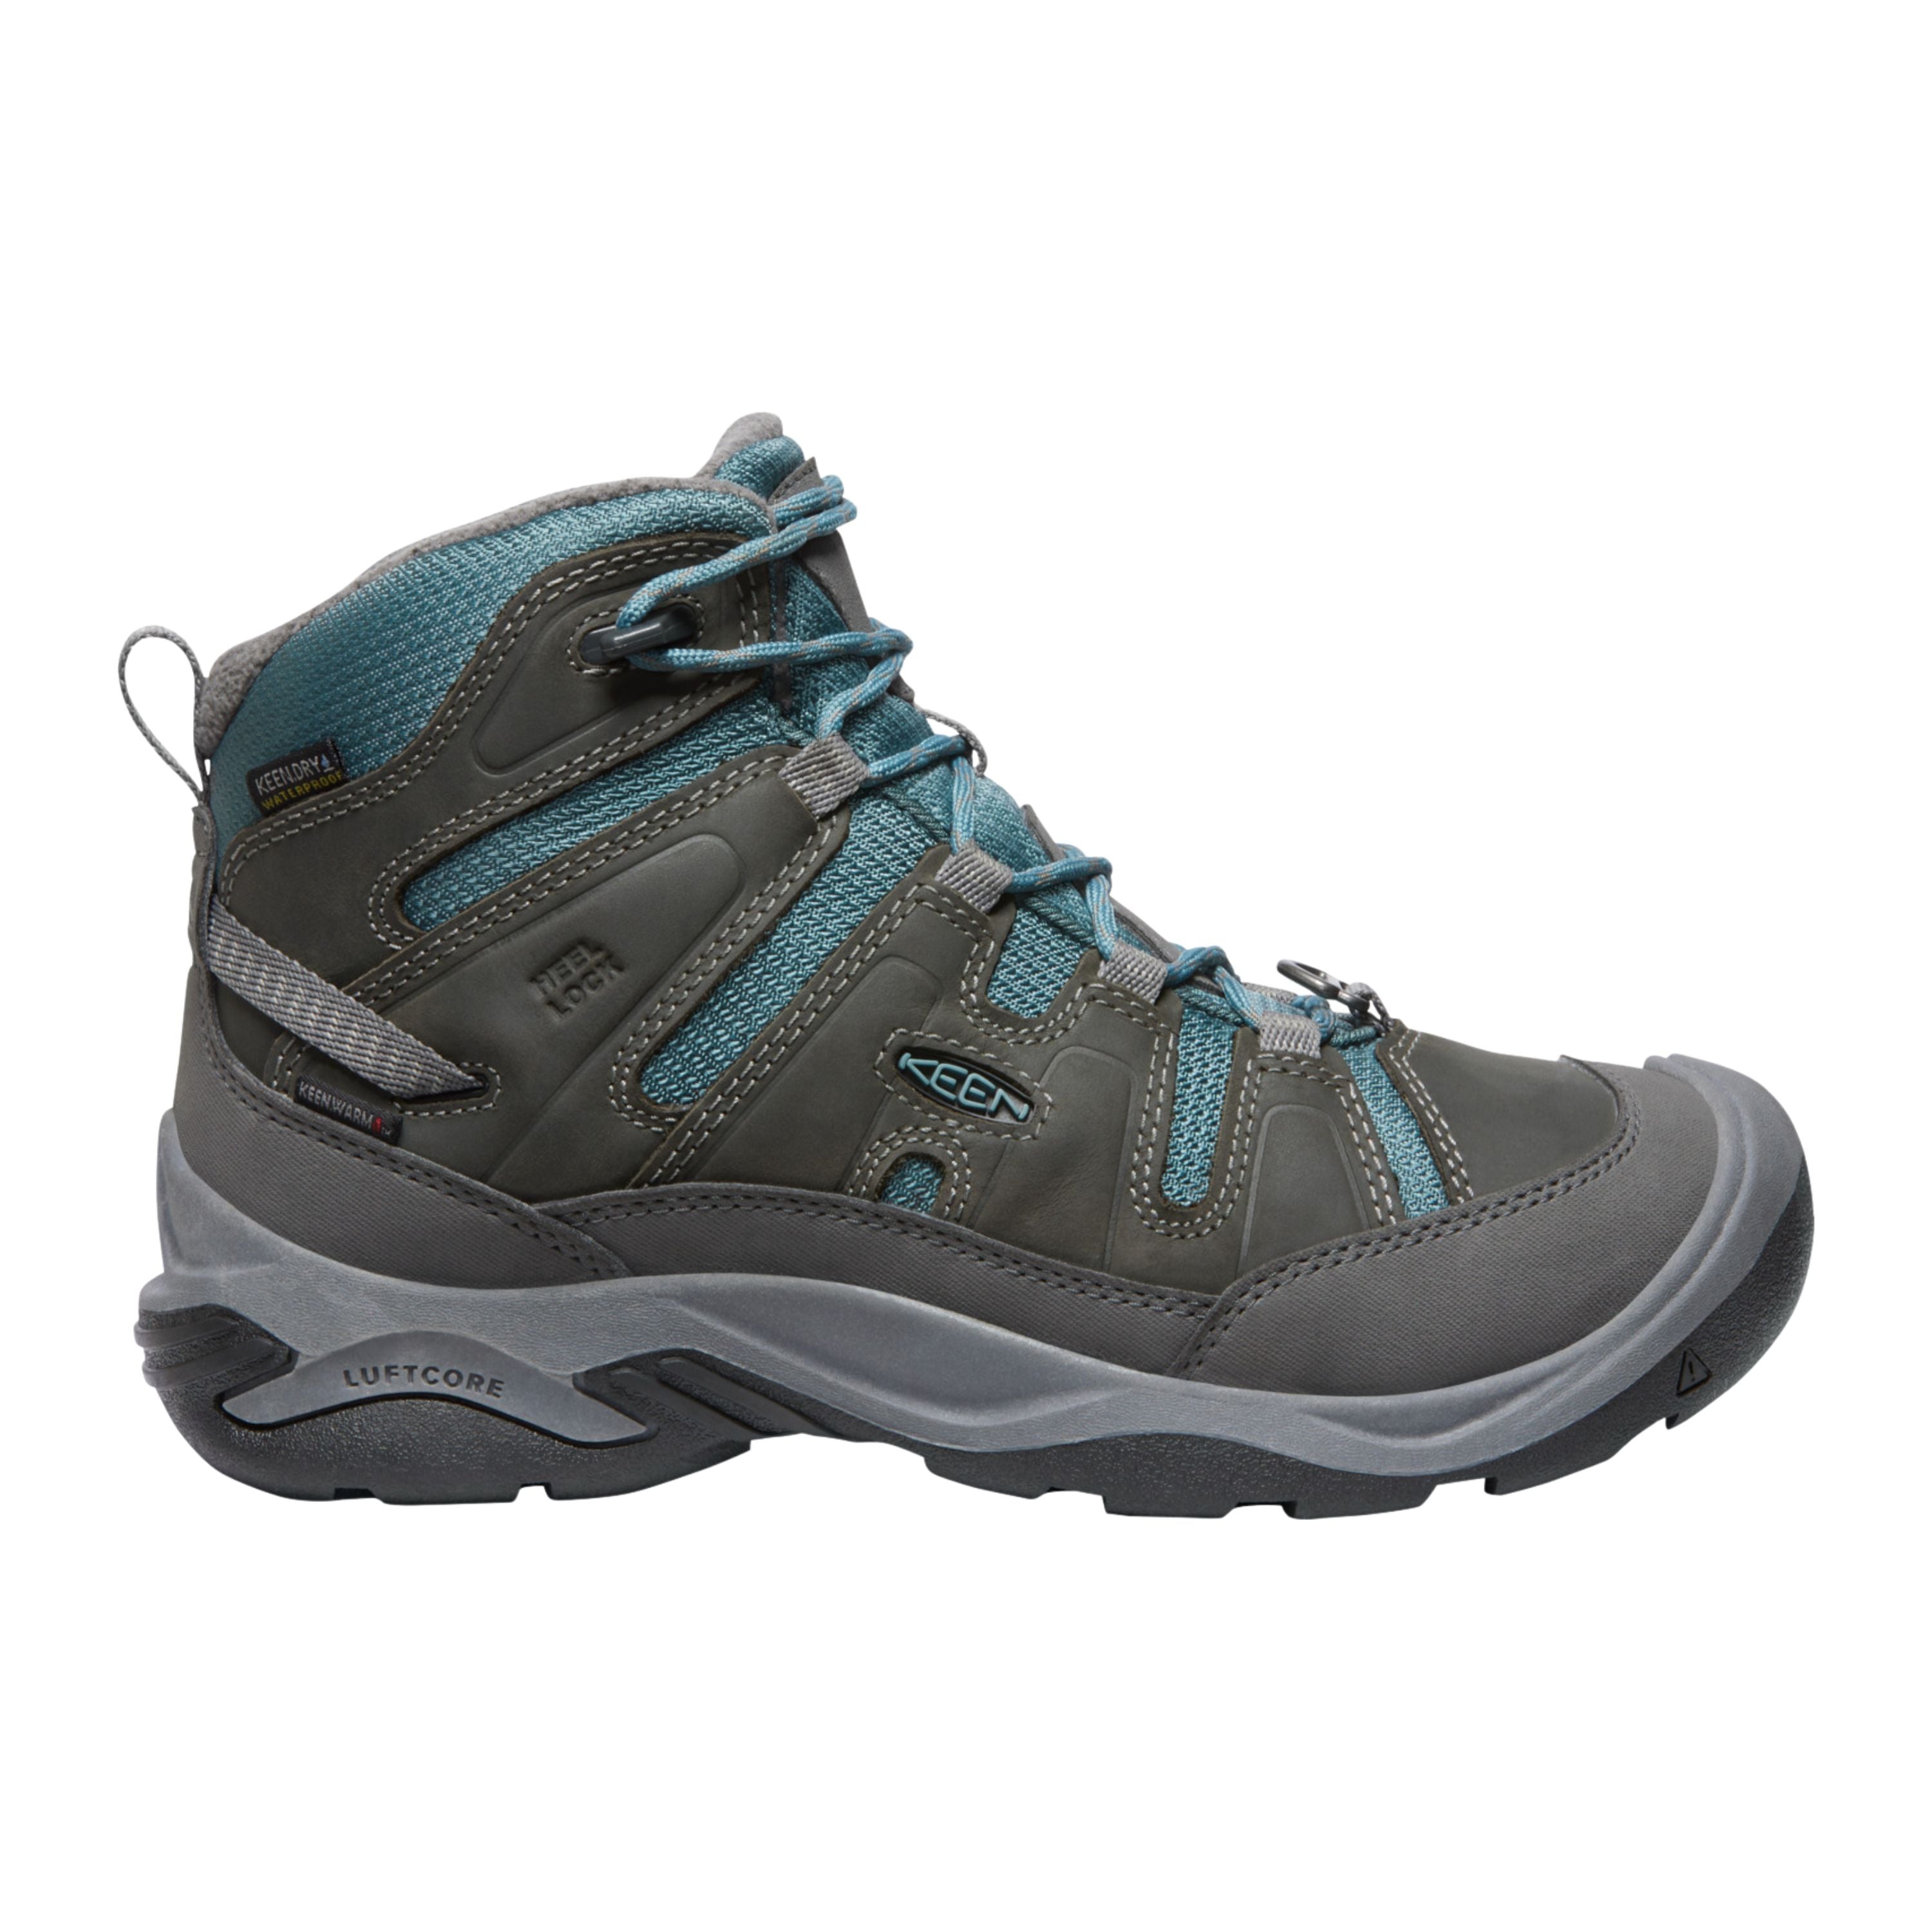 "Circadia MID Polar" Insulated hiking boots - Women's